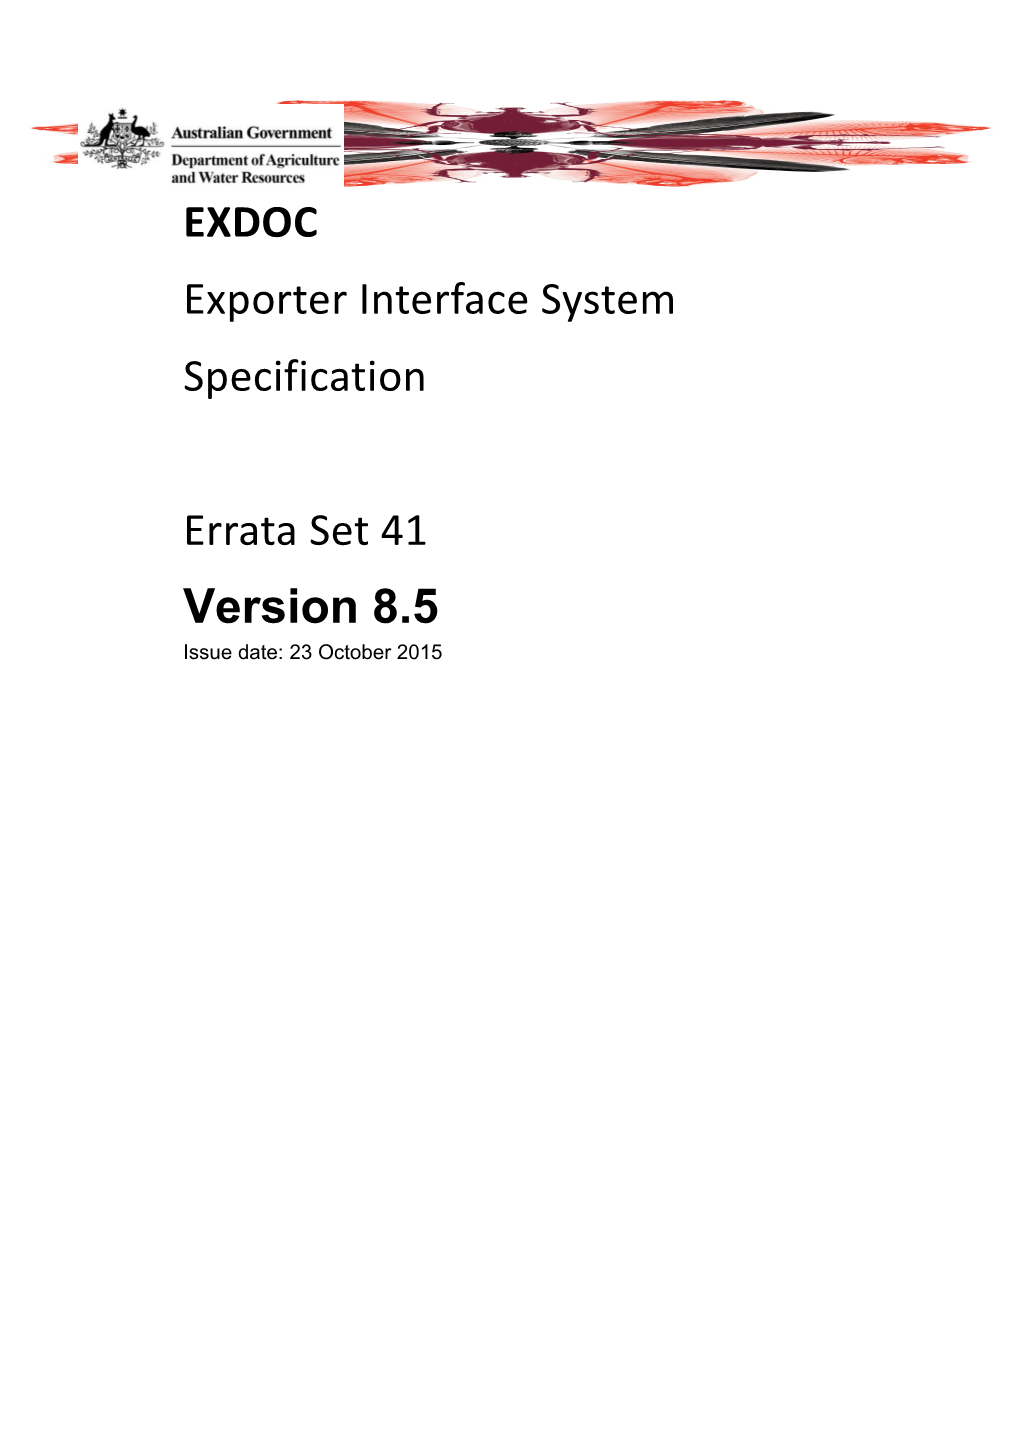 EXDOC Exporter Interface System Specification Errata Set 41